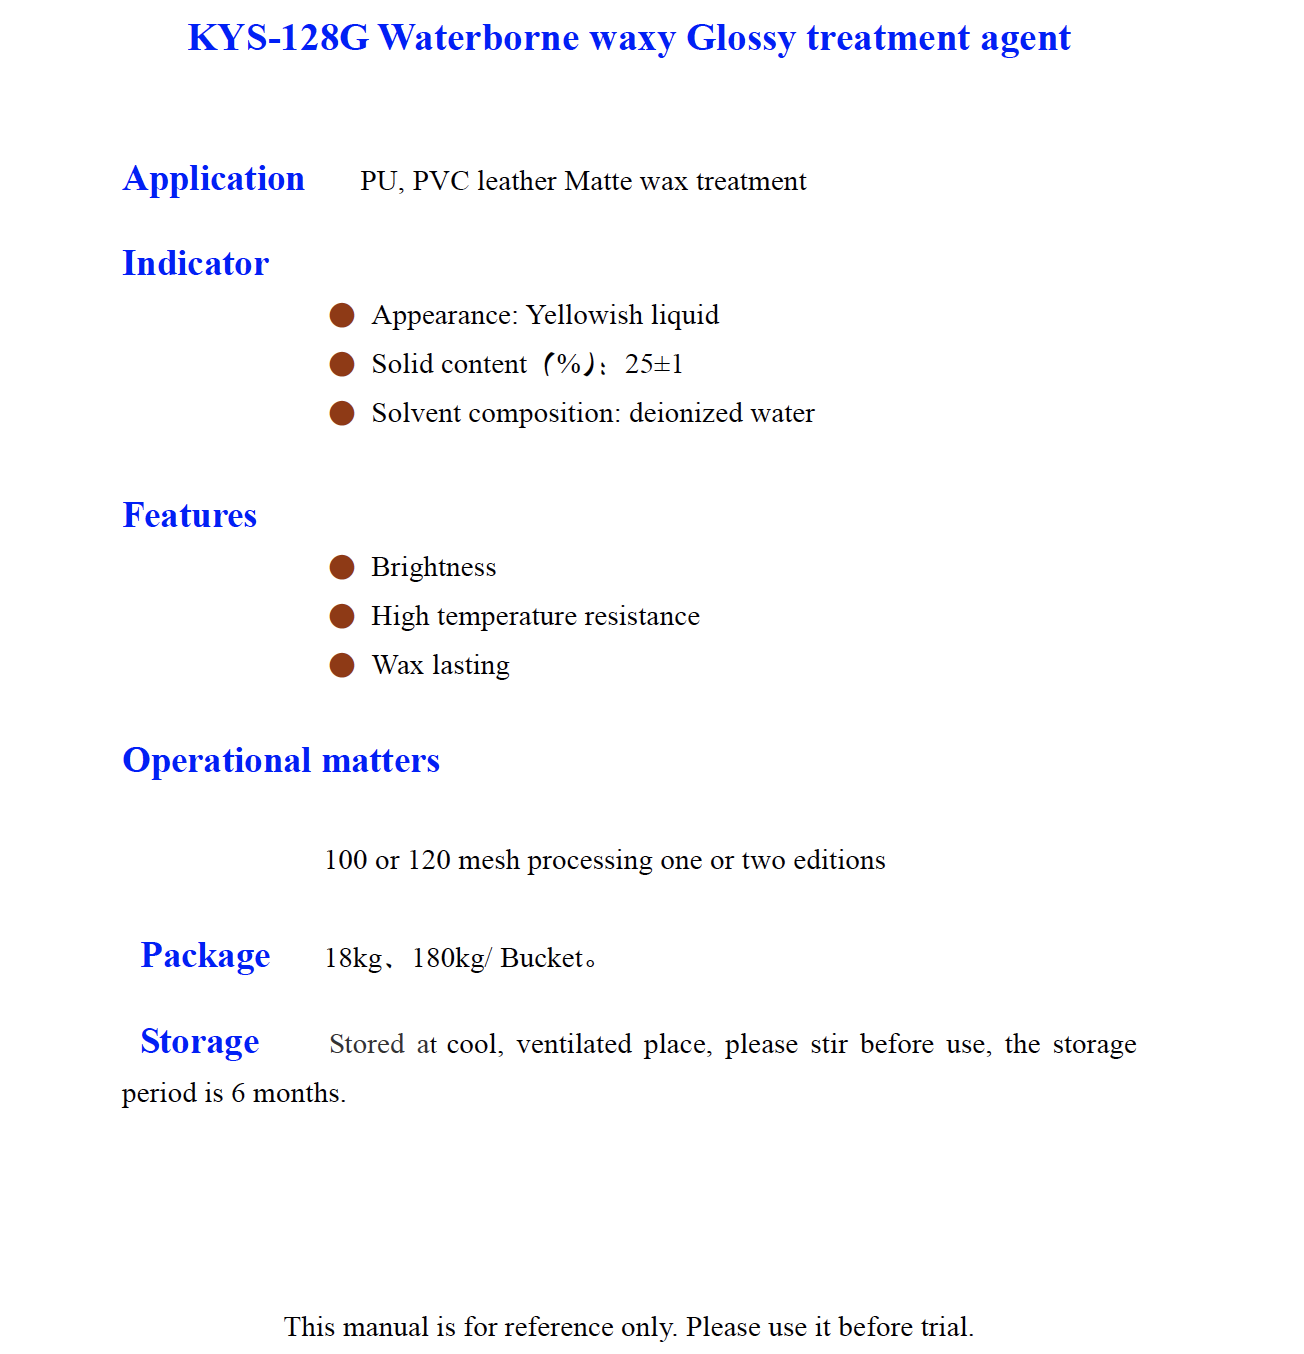 KYS 128G Waterborne waxy Glossy treatment agent